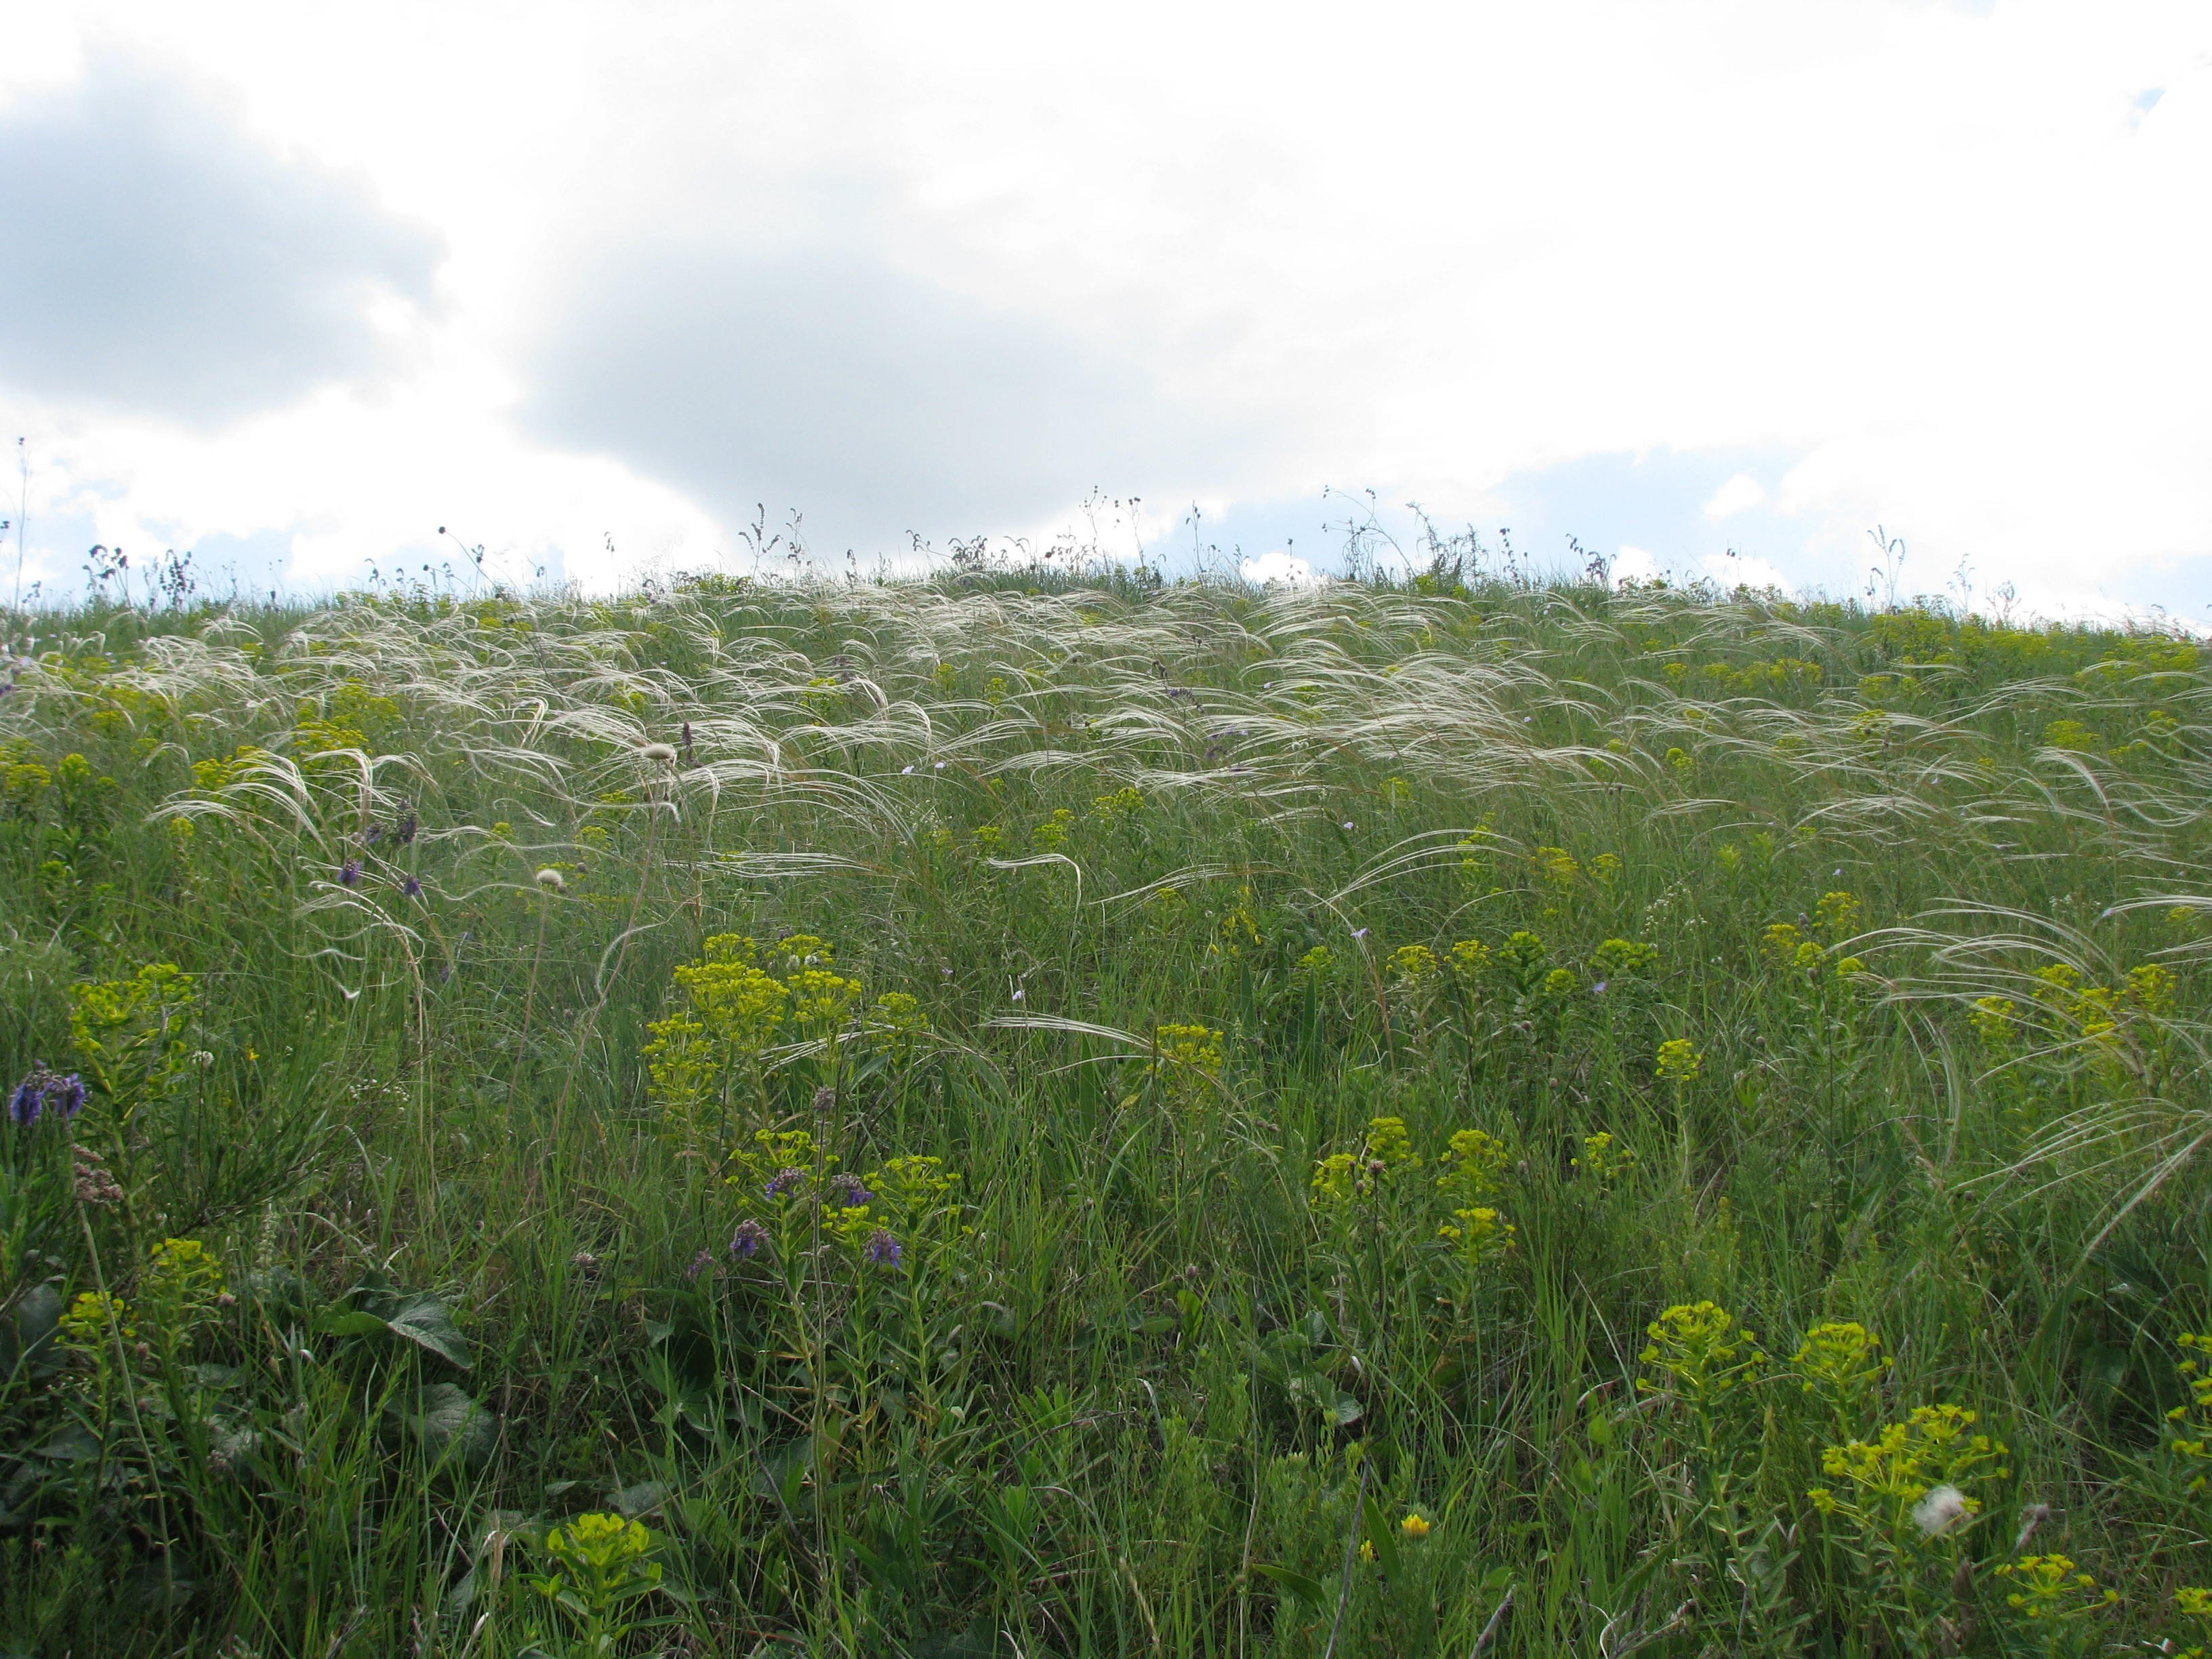 forb-bunchgrass steppe in Abazivka (Photo: D. Davydov)